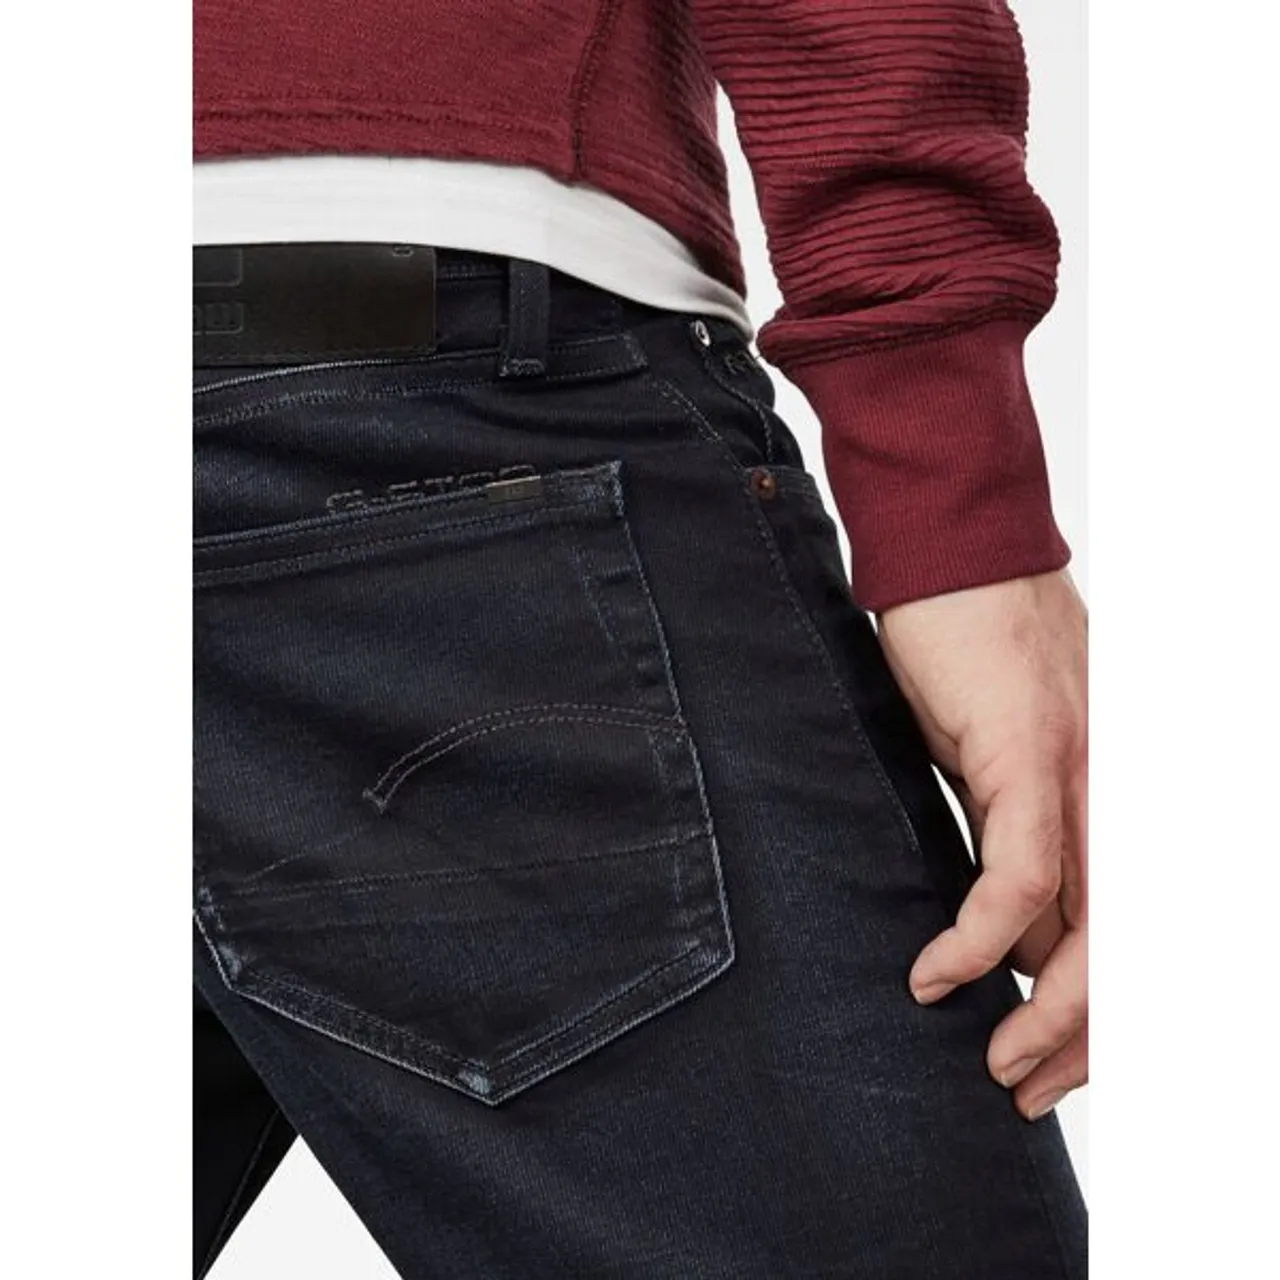 Slim-fit-Jeans G-STAR RAW "3301 Slim" Gr. 32, Länge 30, blau (dark aged) Herren Jeans Slim Fit